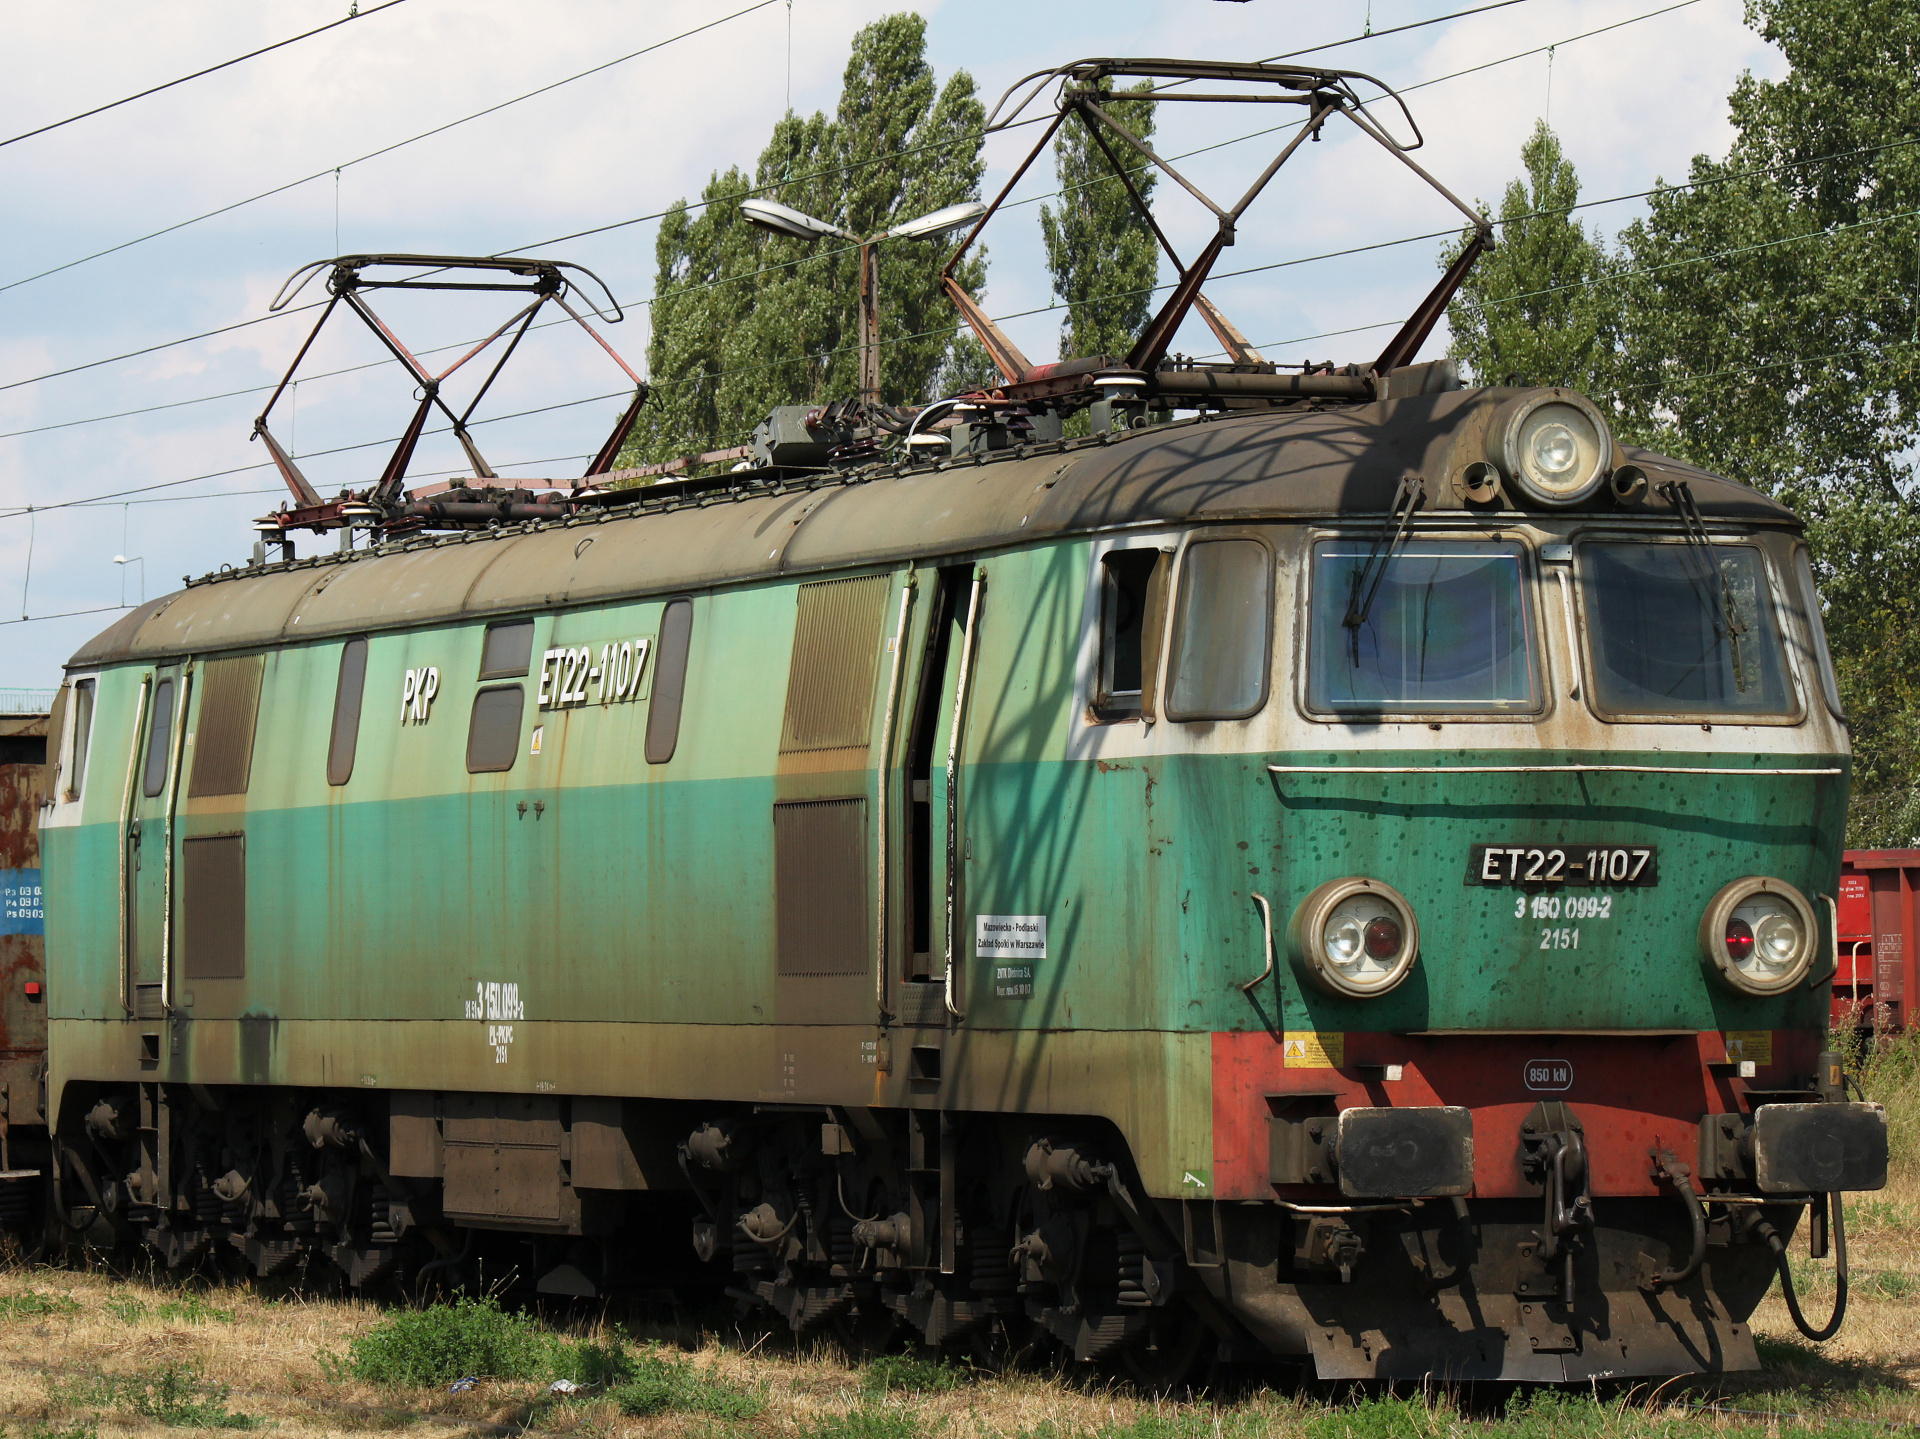 ET22-1107 (Vehicles » Trains and Locomotives » Pafawag 201E)